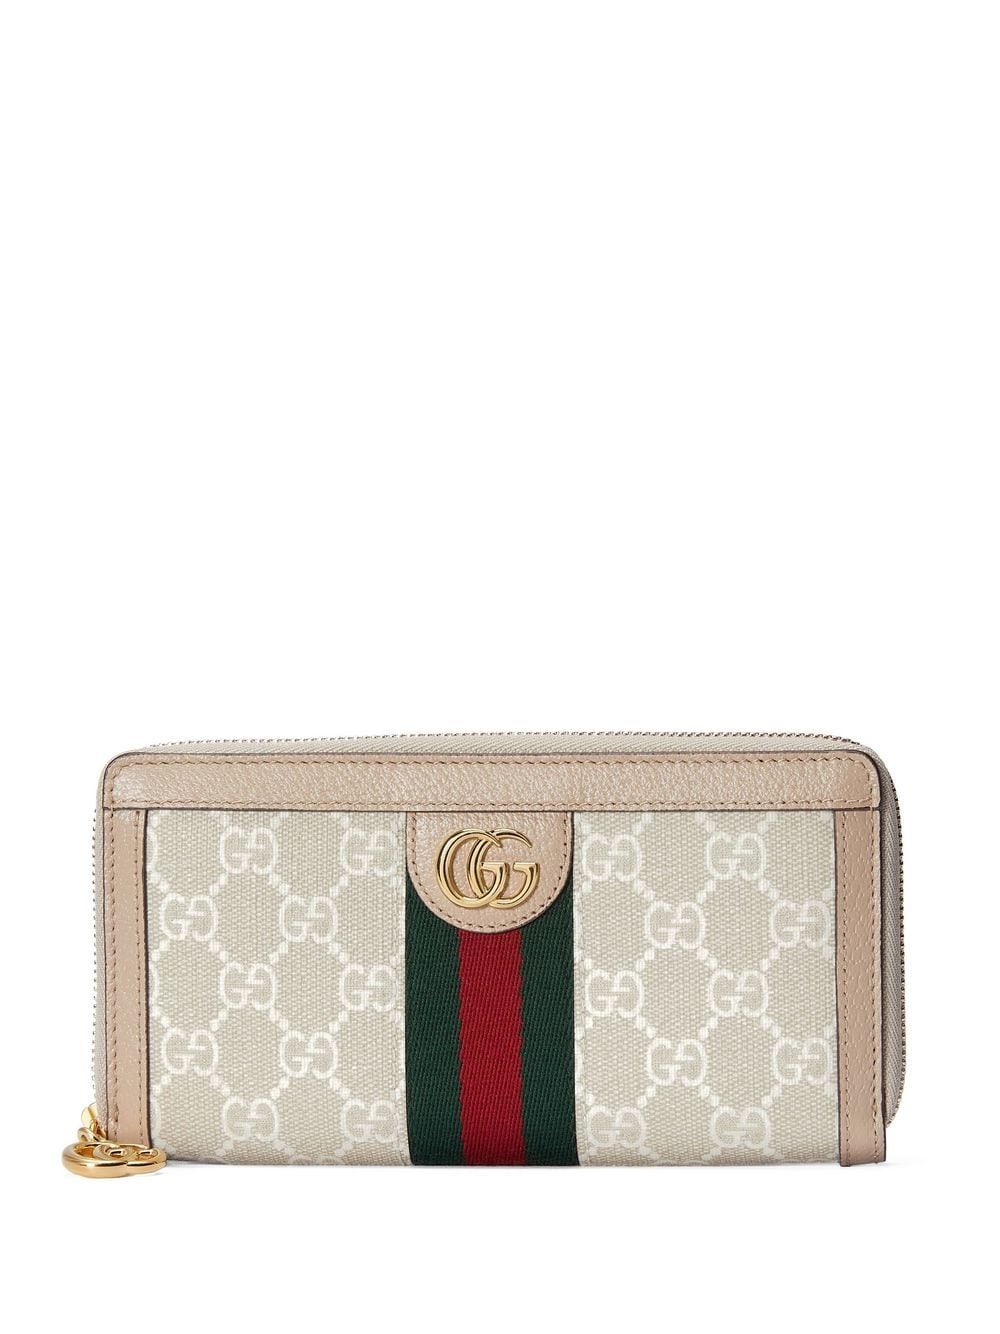 Gucci Ophidia Gg Zip Around Wallet In White | ModeSens